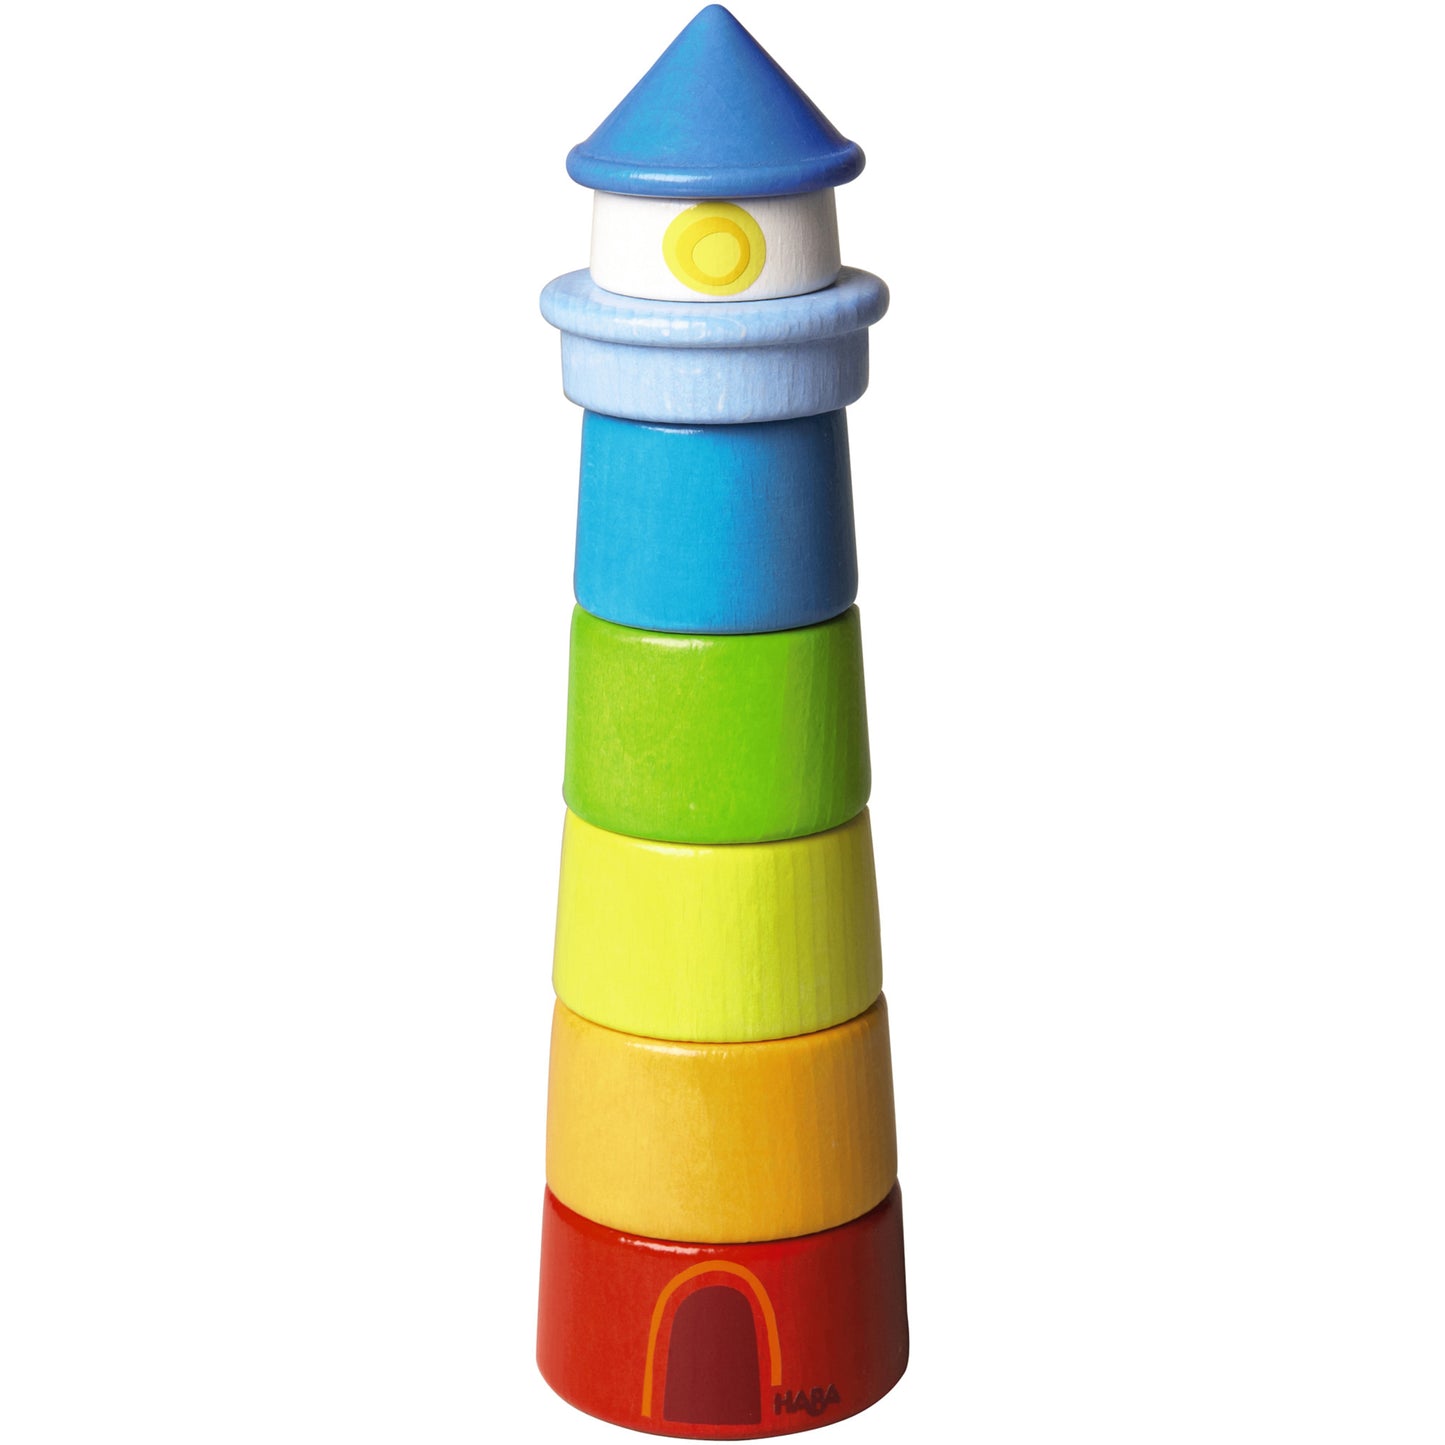 HABA - Stacking Game Lighthouse